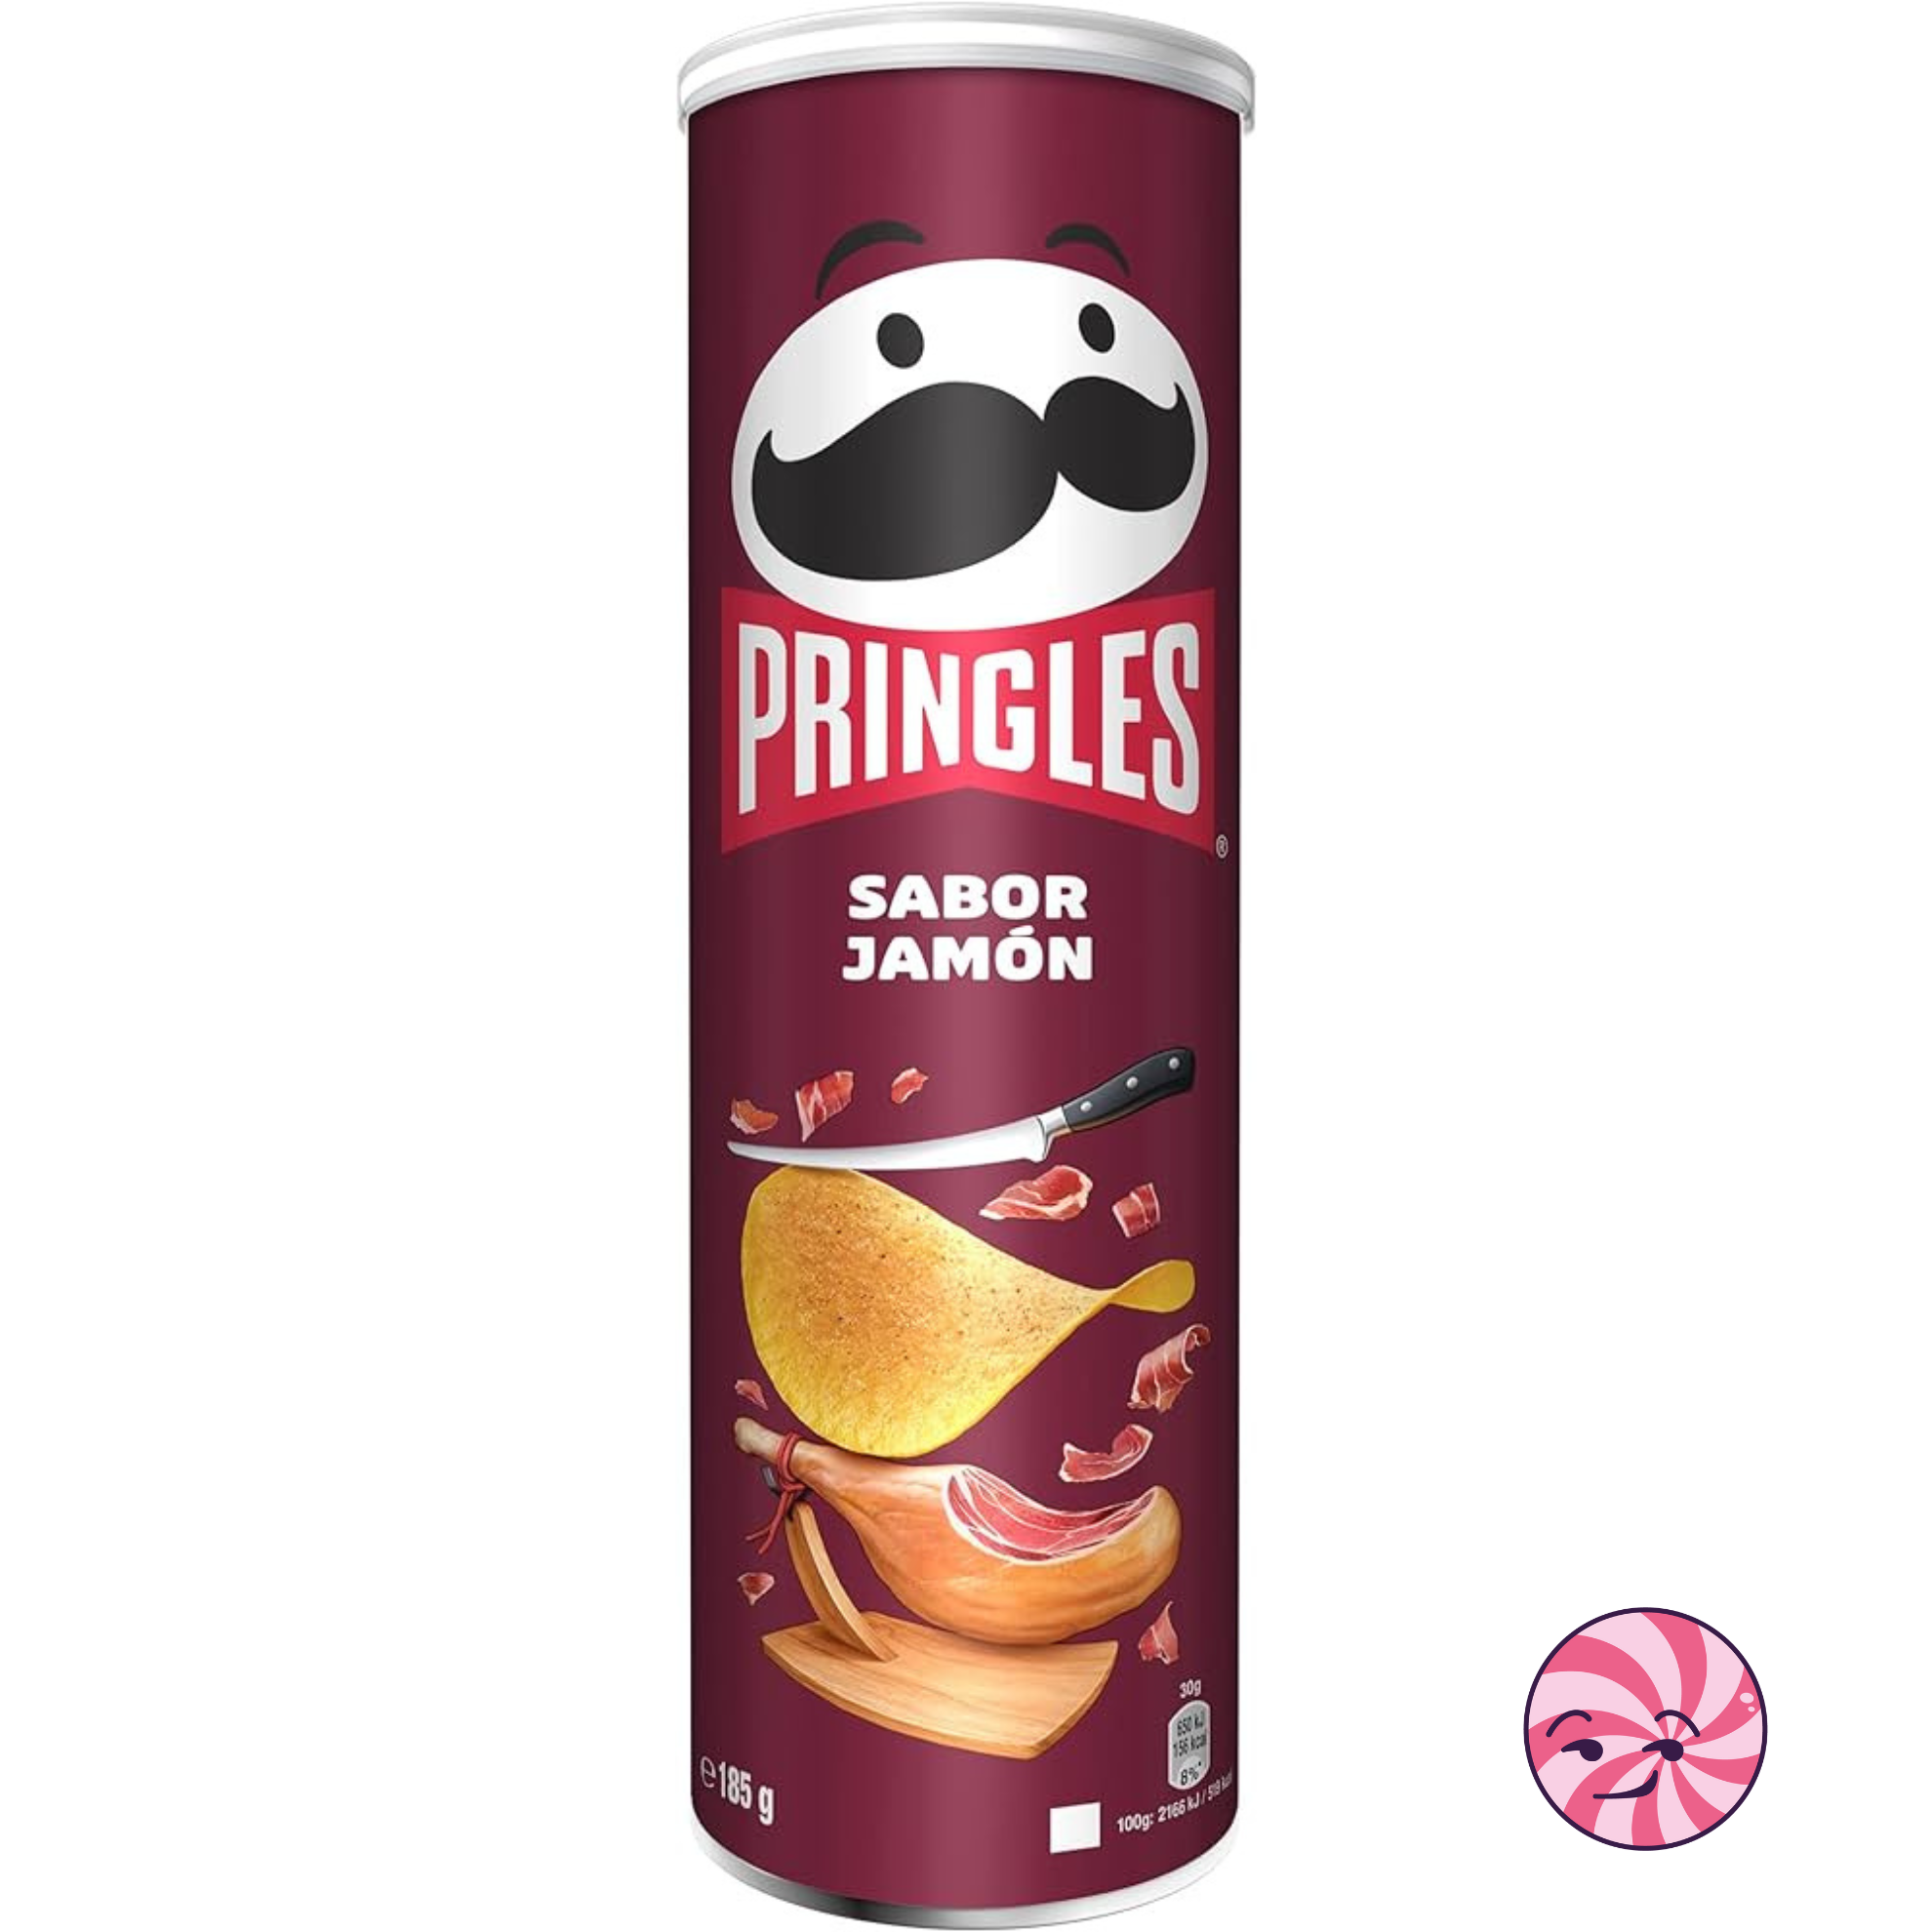 Pringles sabor jamón XL